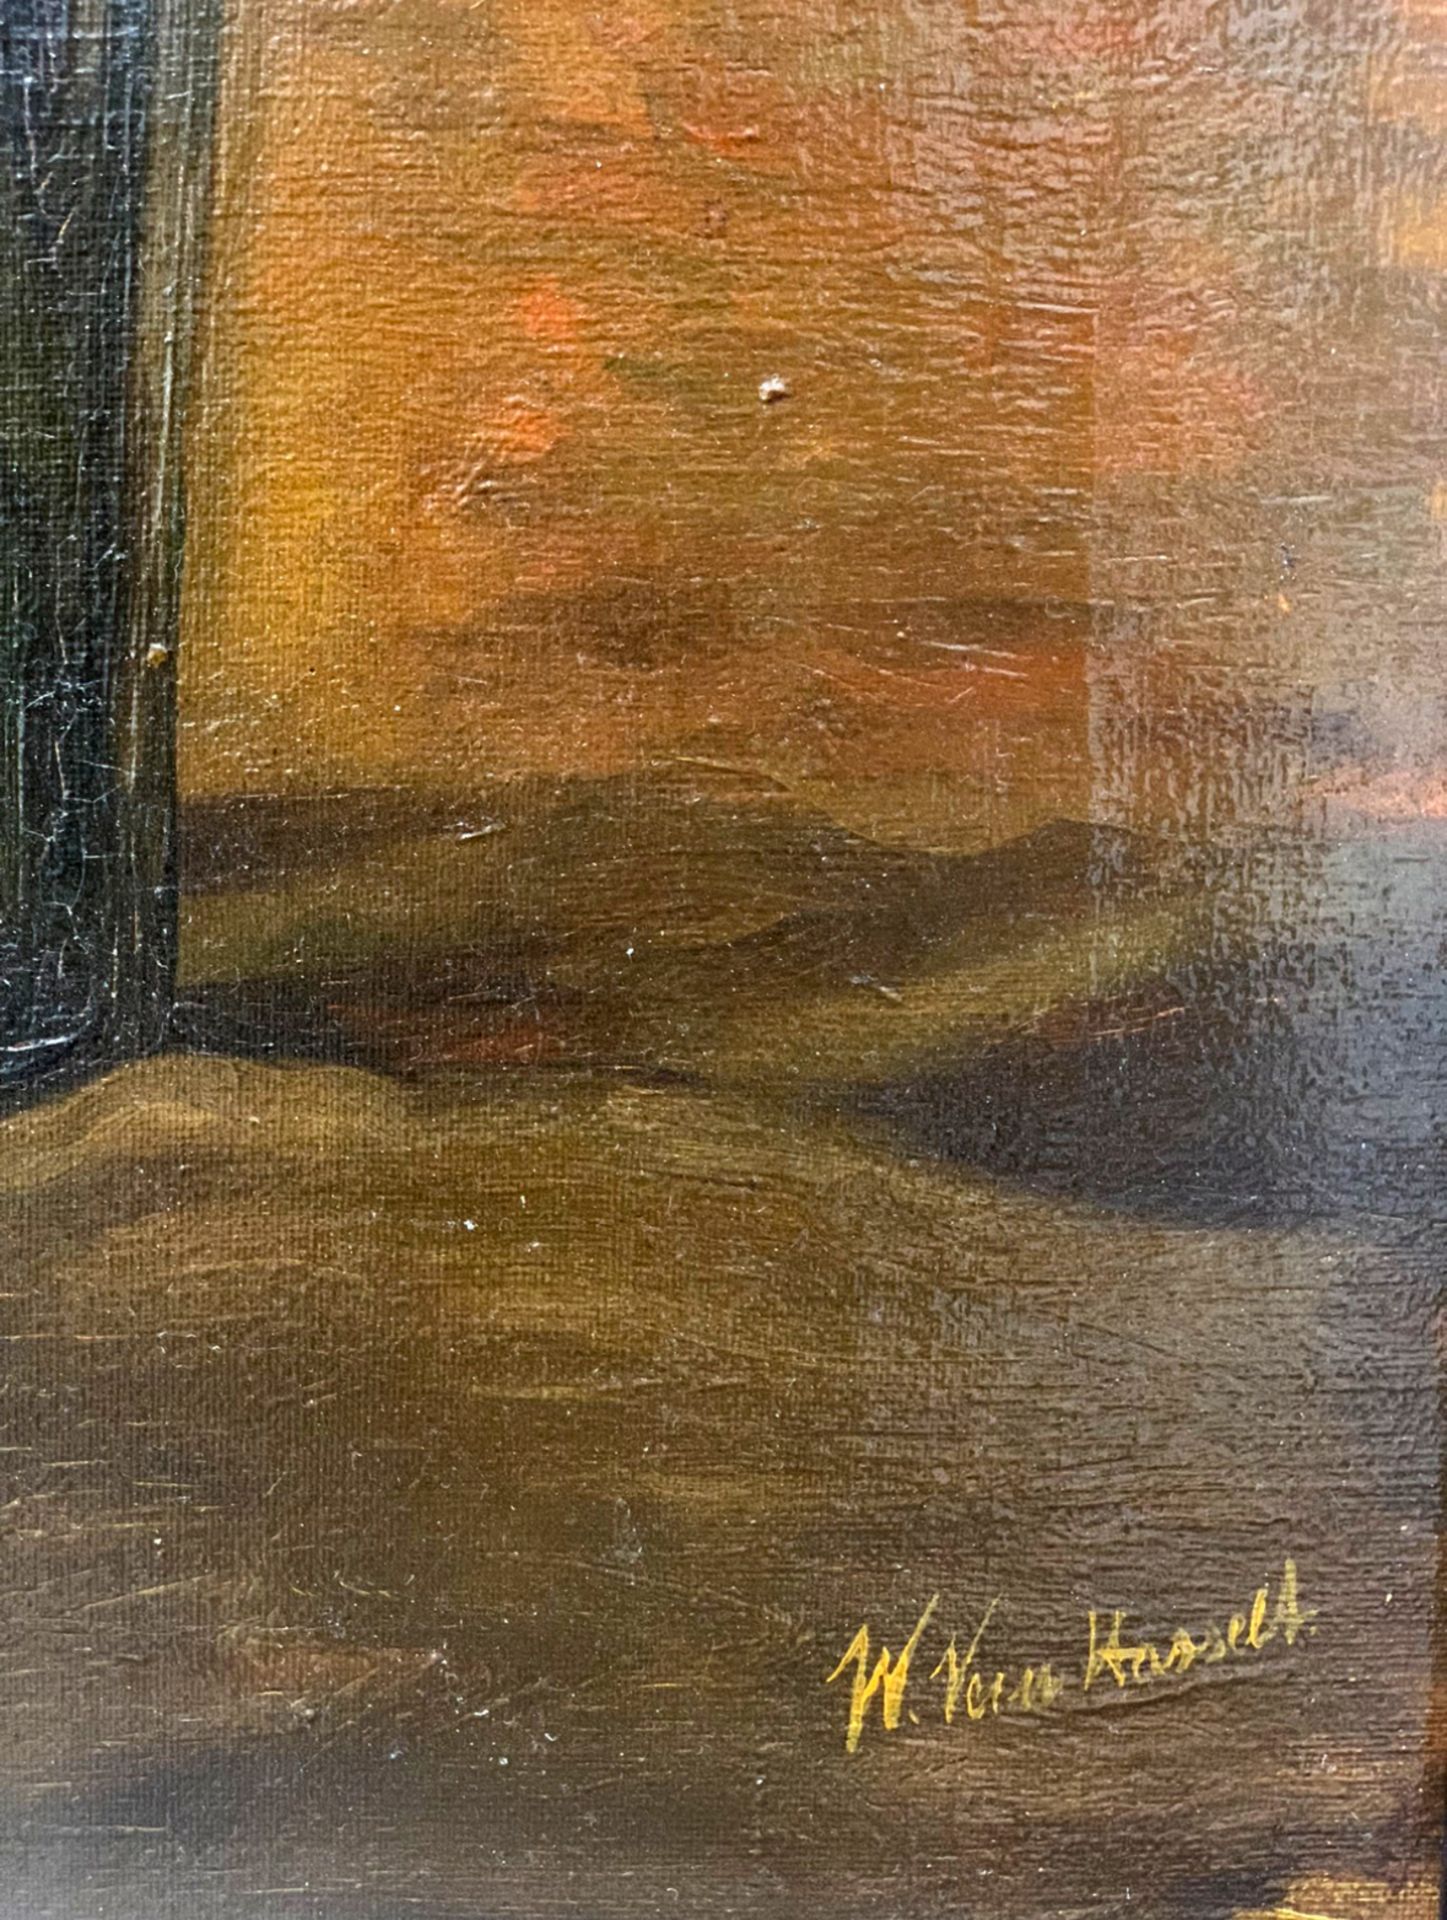 Van Hasselt Willem (1882-1963), Oil Painting on Canvas - Bild 2 aus 3